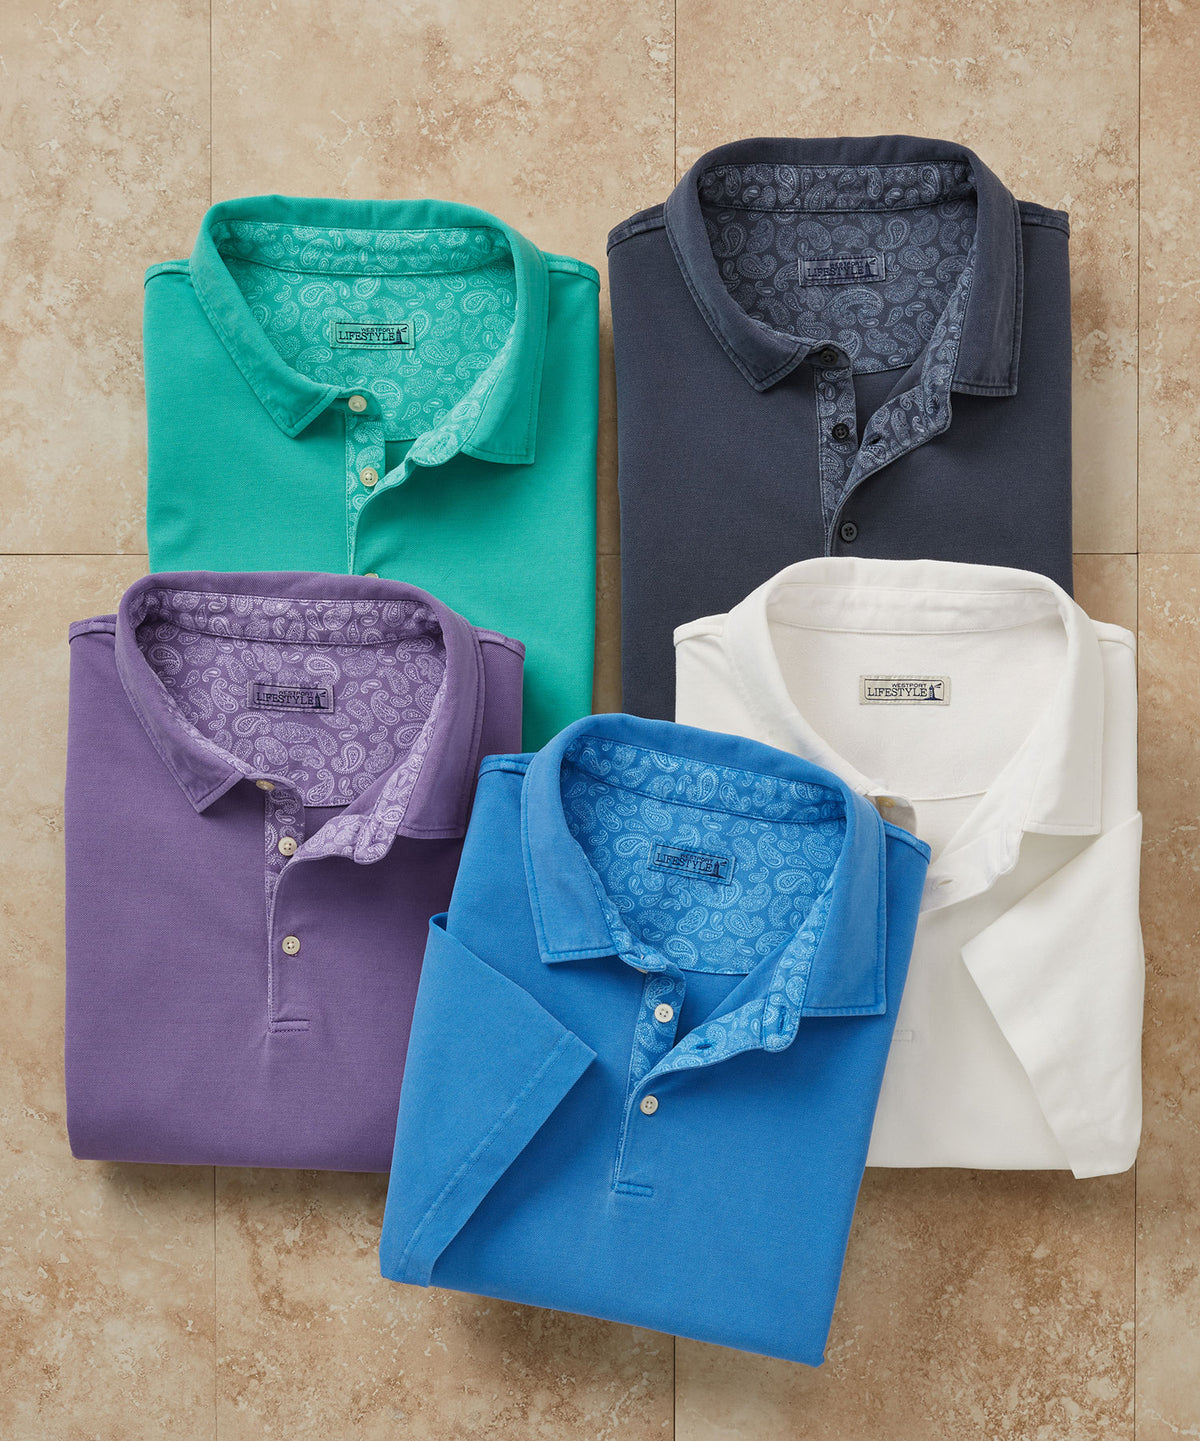 Westport Lifestyle Garment Dyed Pique Polo Knit Shirt, Men's Big & Tall